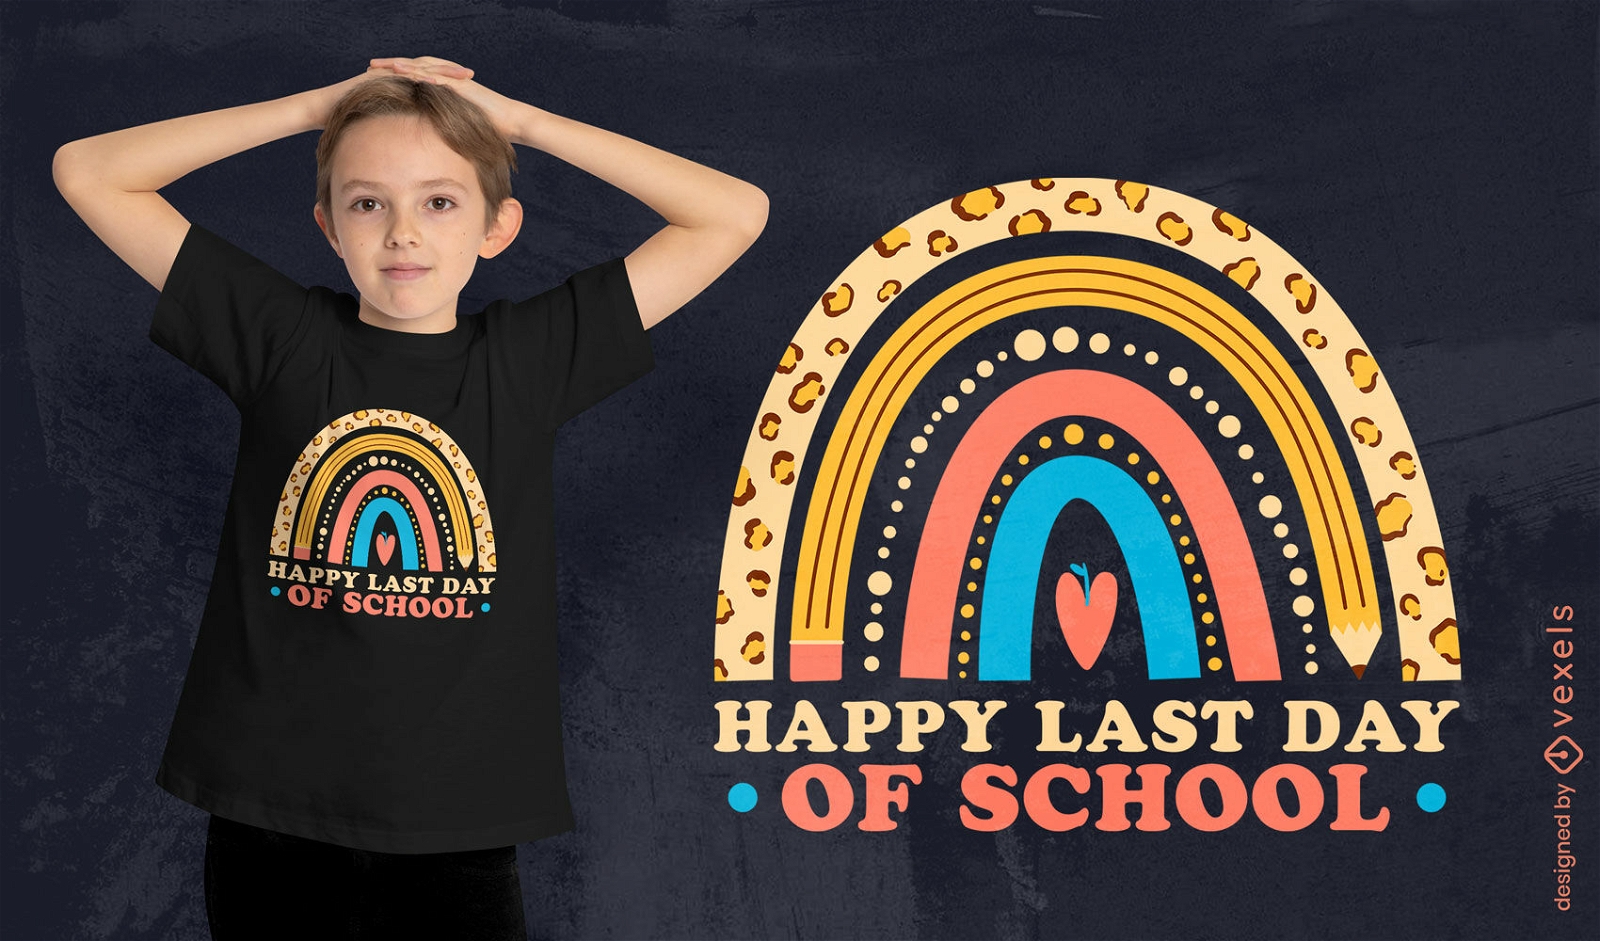 Regenbogen-T-Shirt-Design f?r den letzten Schultag